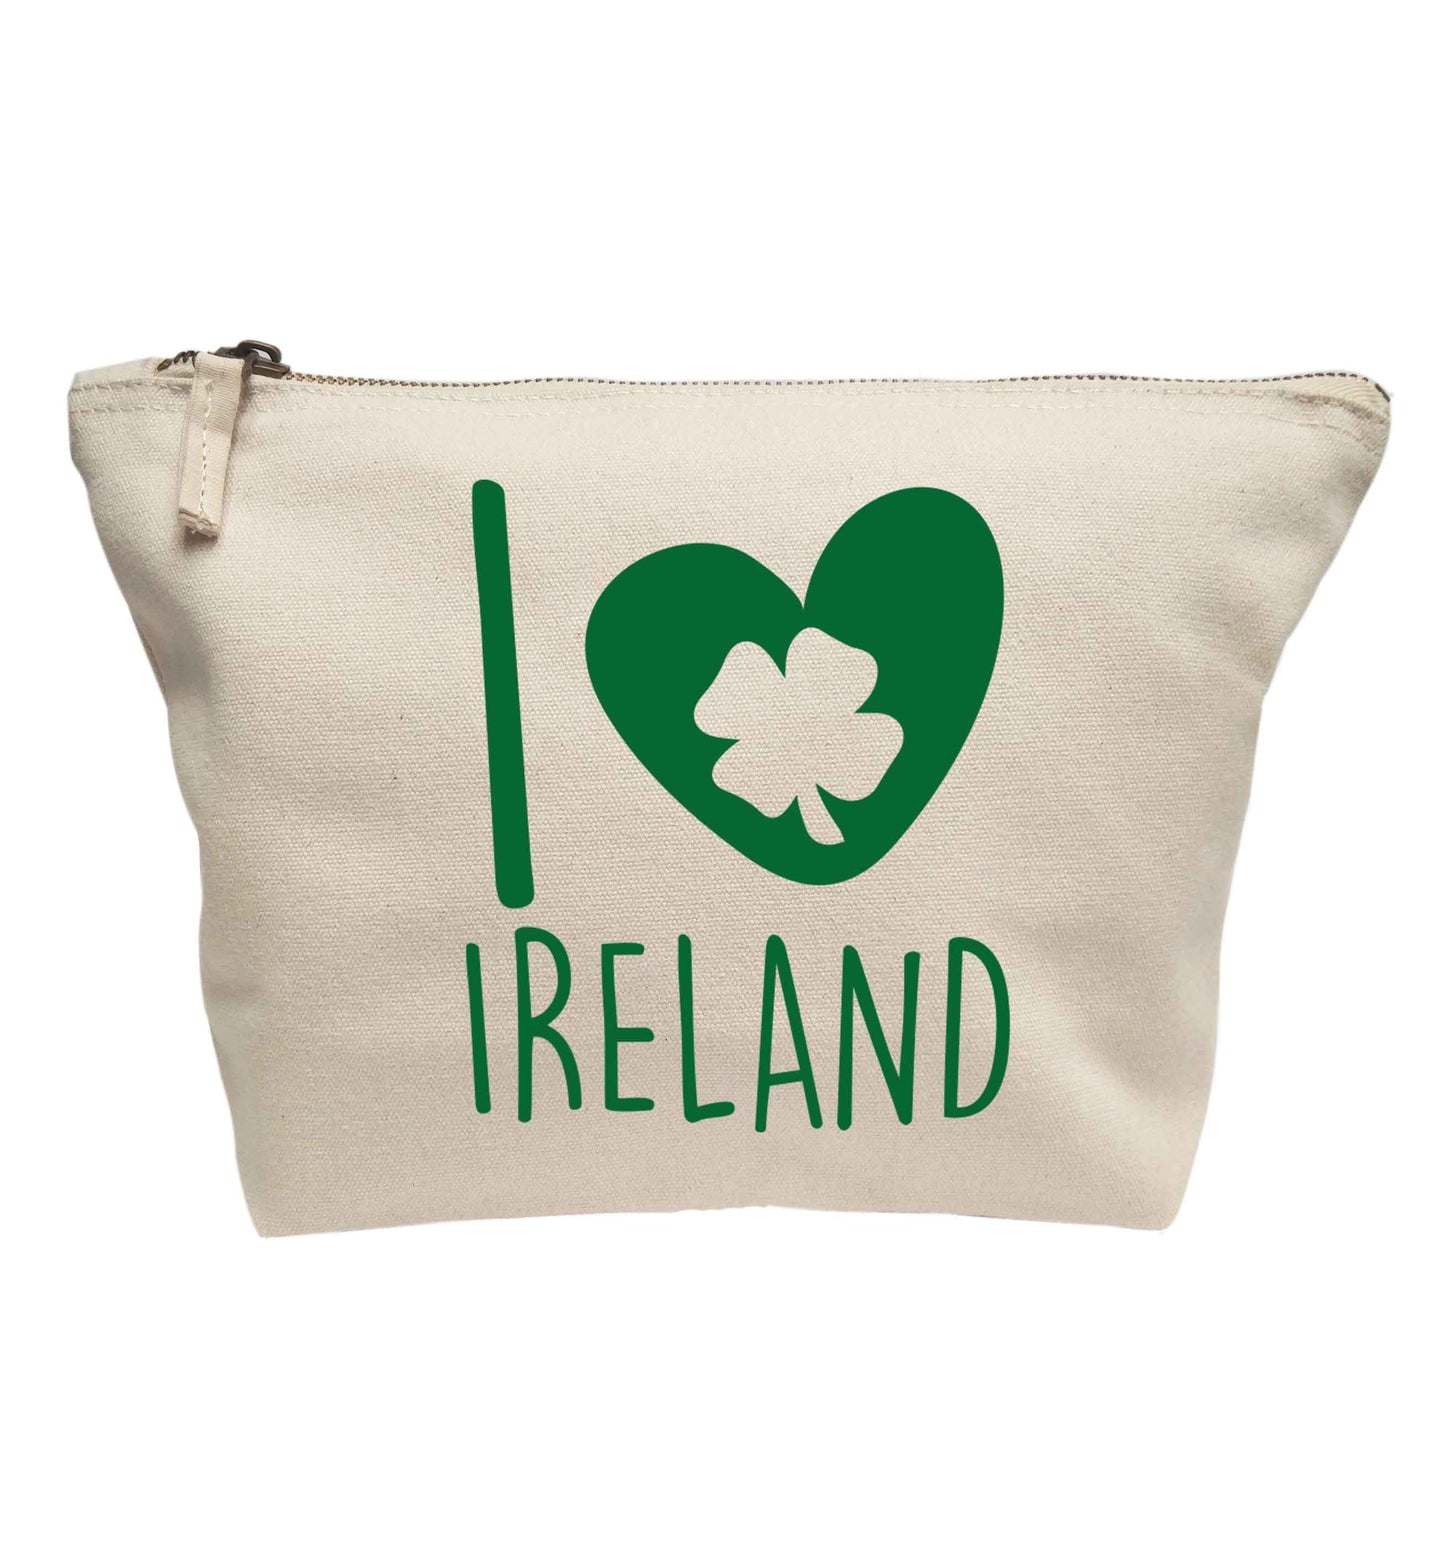 I love Ireland | Makeup / wash bag